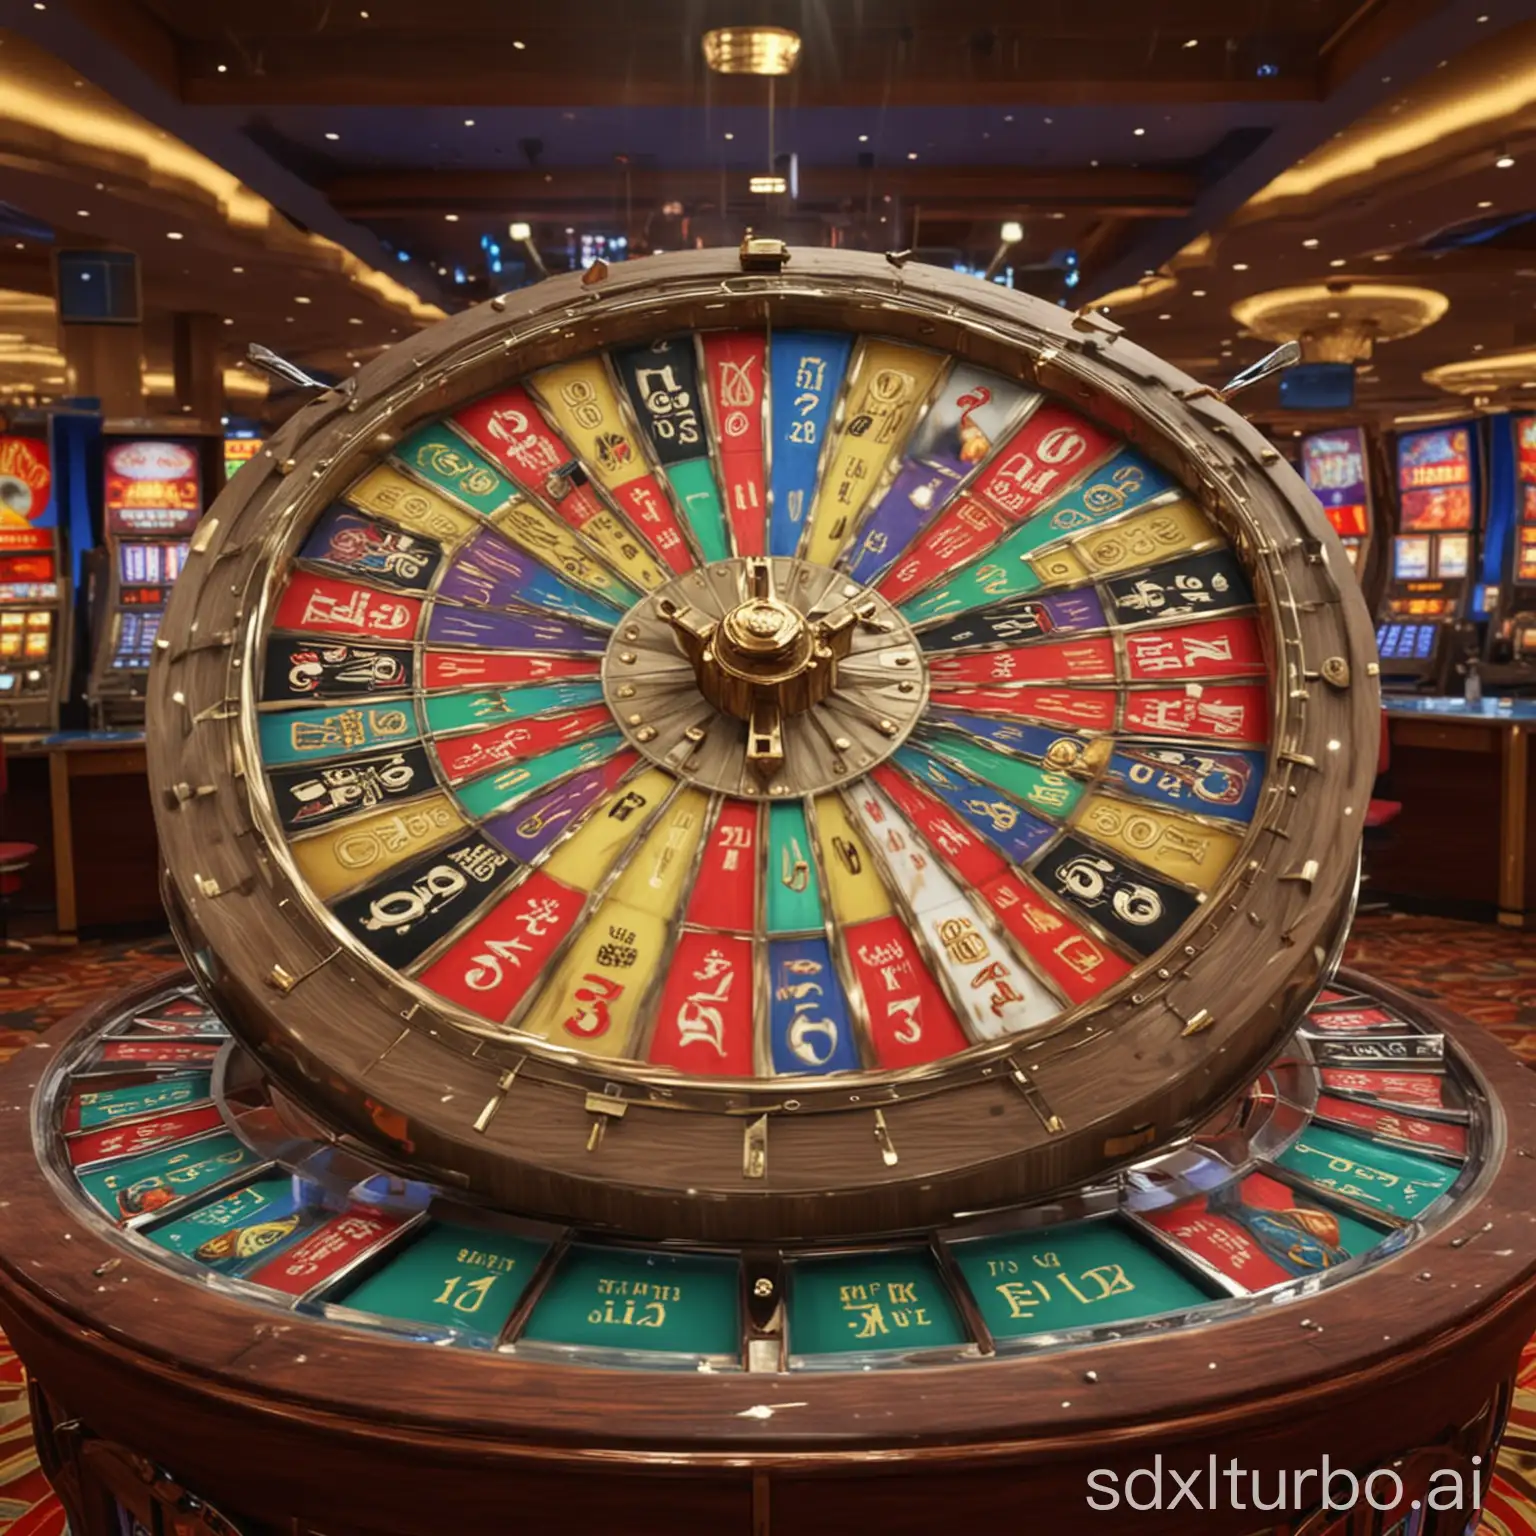 Colorful-Wheel-of-Fortune-in-Vibrant-Casino-8K-Image